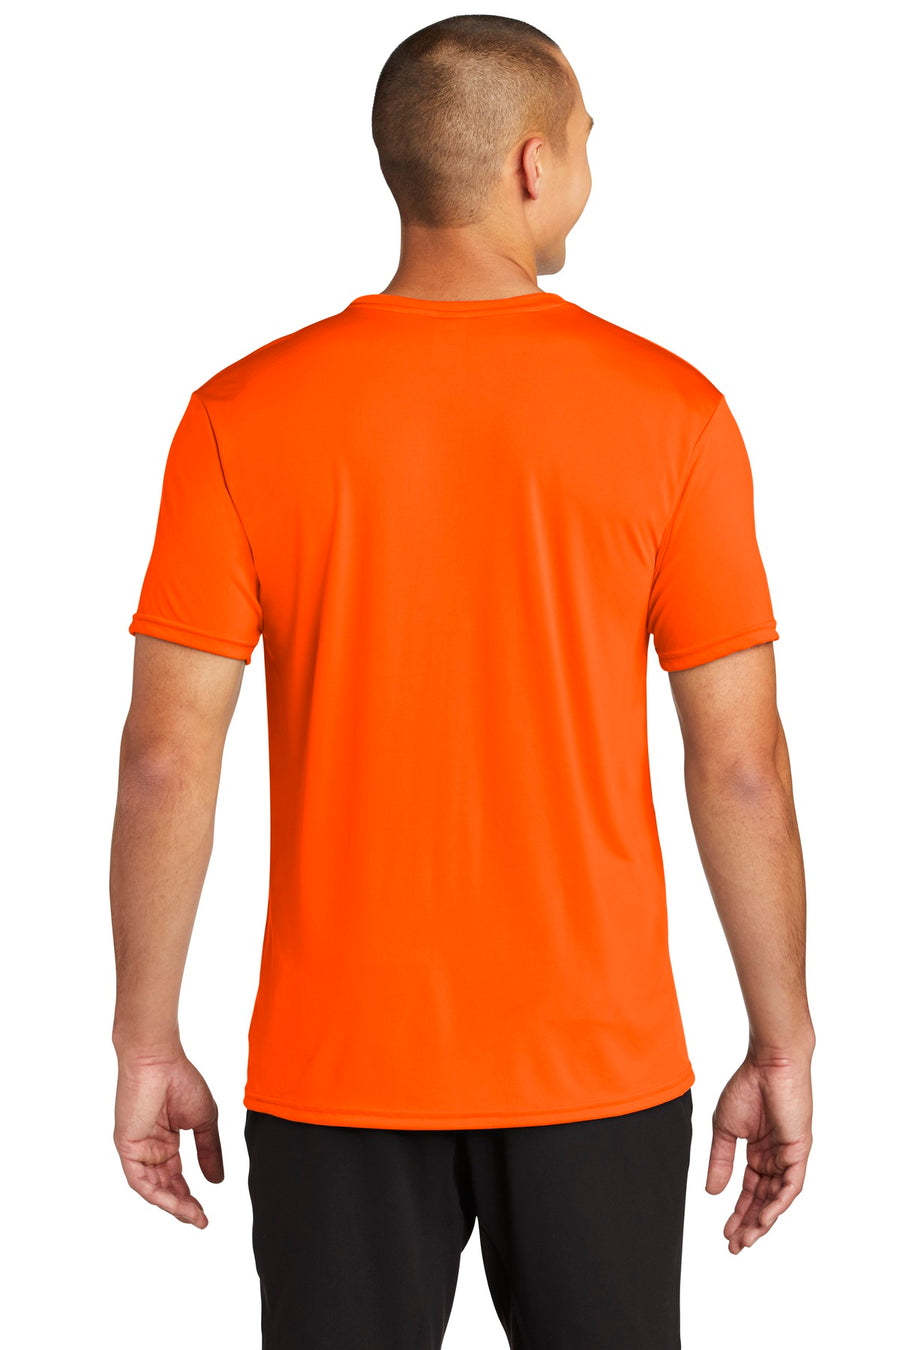 46000-Sport Orange-back_model